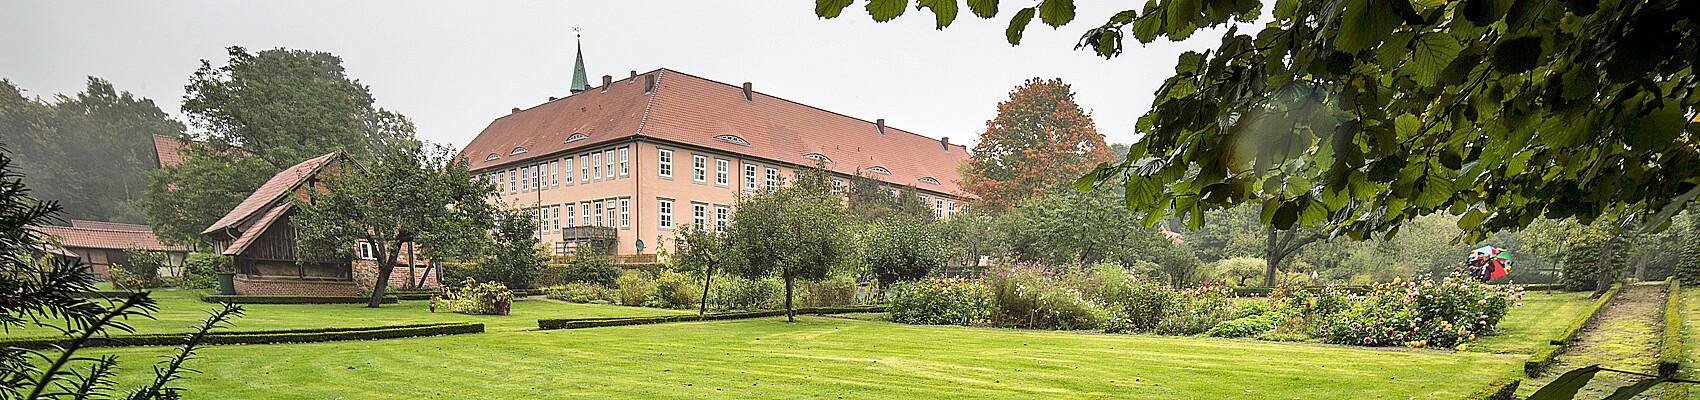 Das Kloster Isenhagen in Hankensbüttel. Foto: Click im Kloster Isenhagen